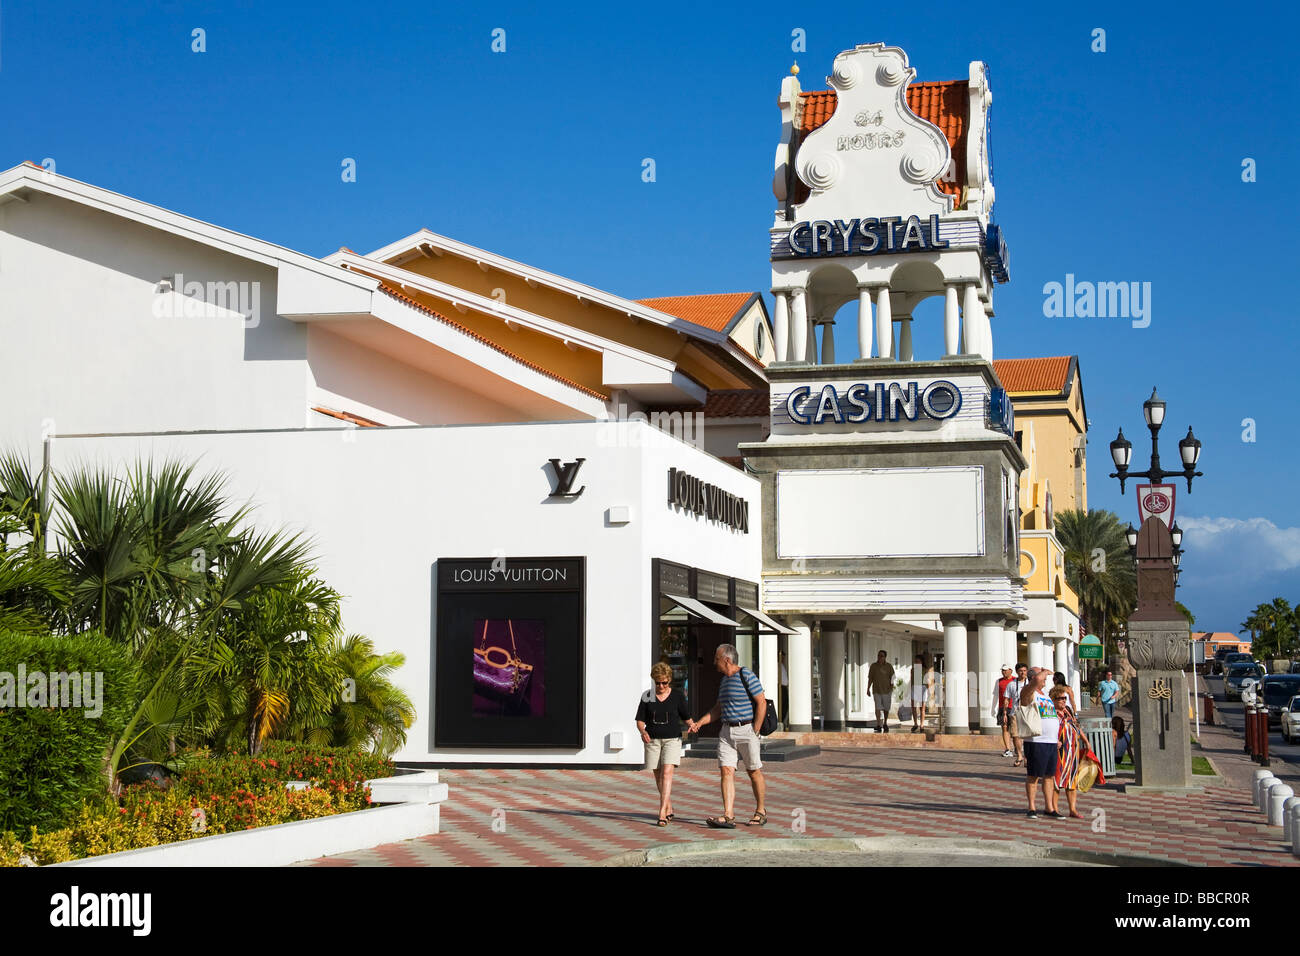 Local achitecture; Crystal Casino, Oranjestad, Aruba Island